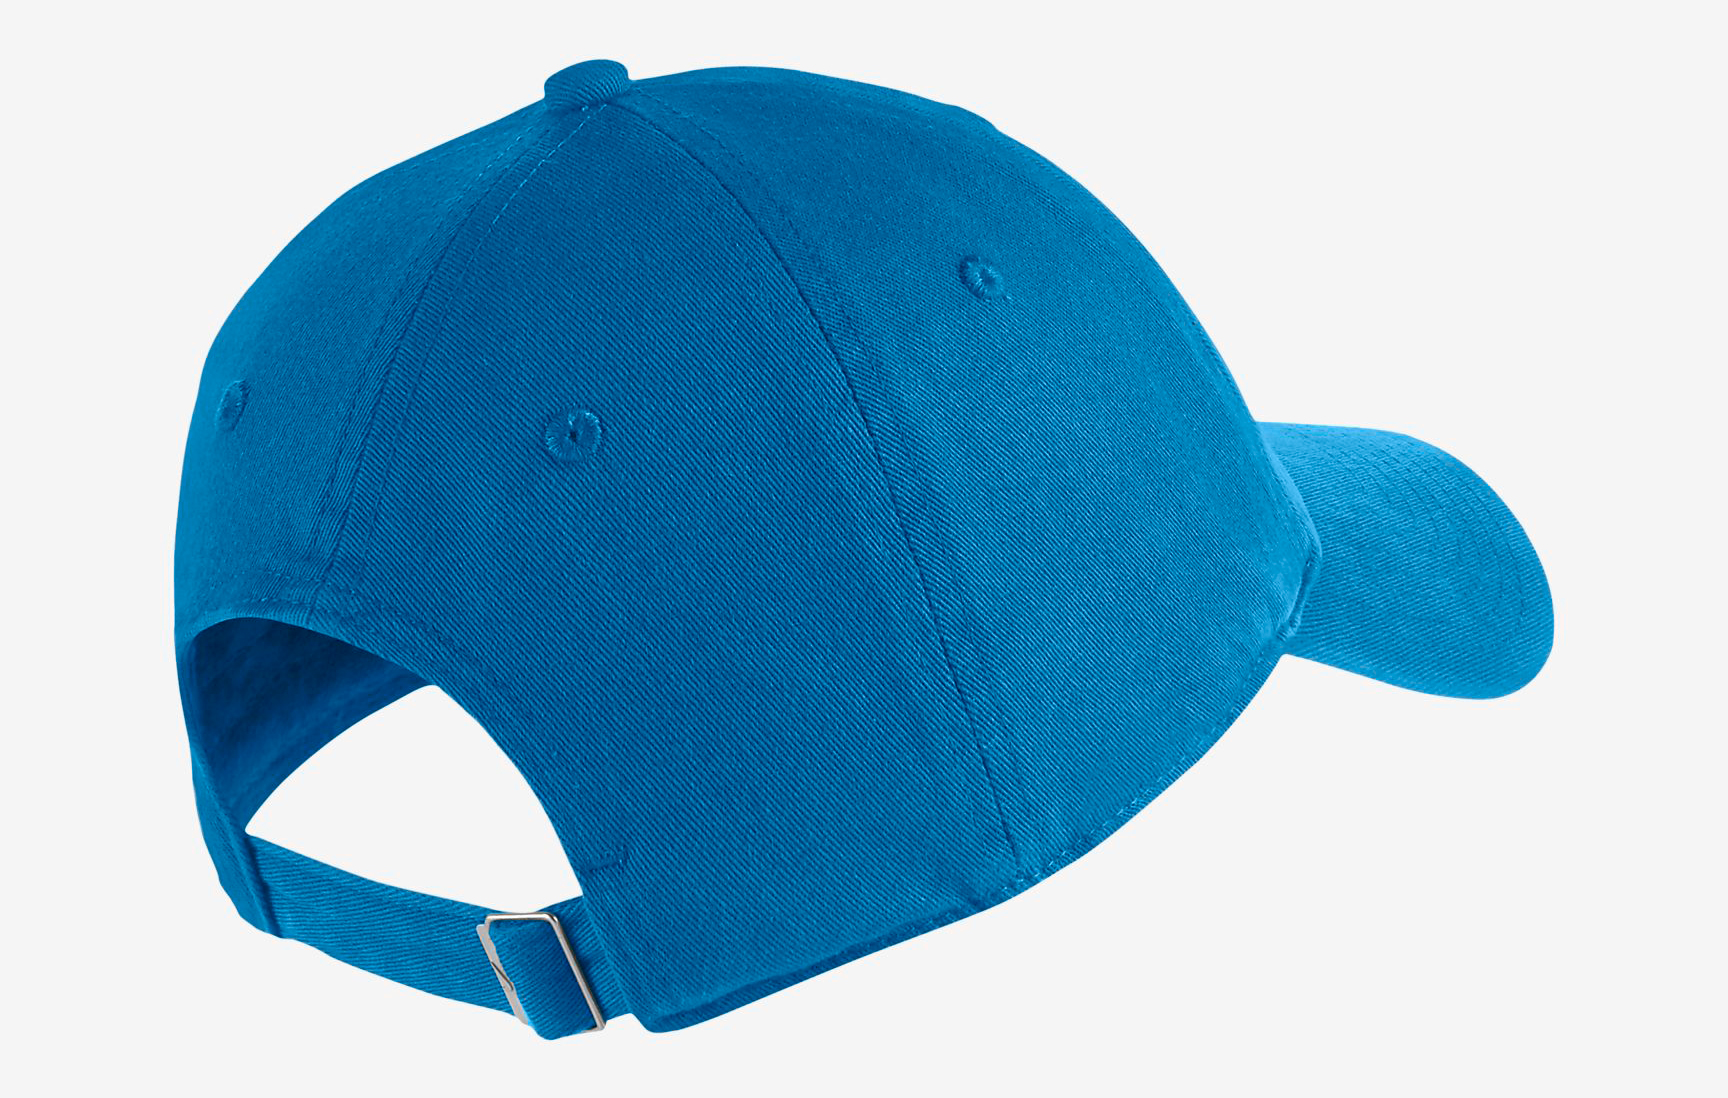 nike watermelon south beach hat match blue 2